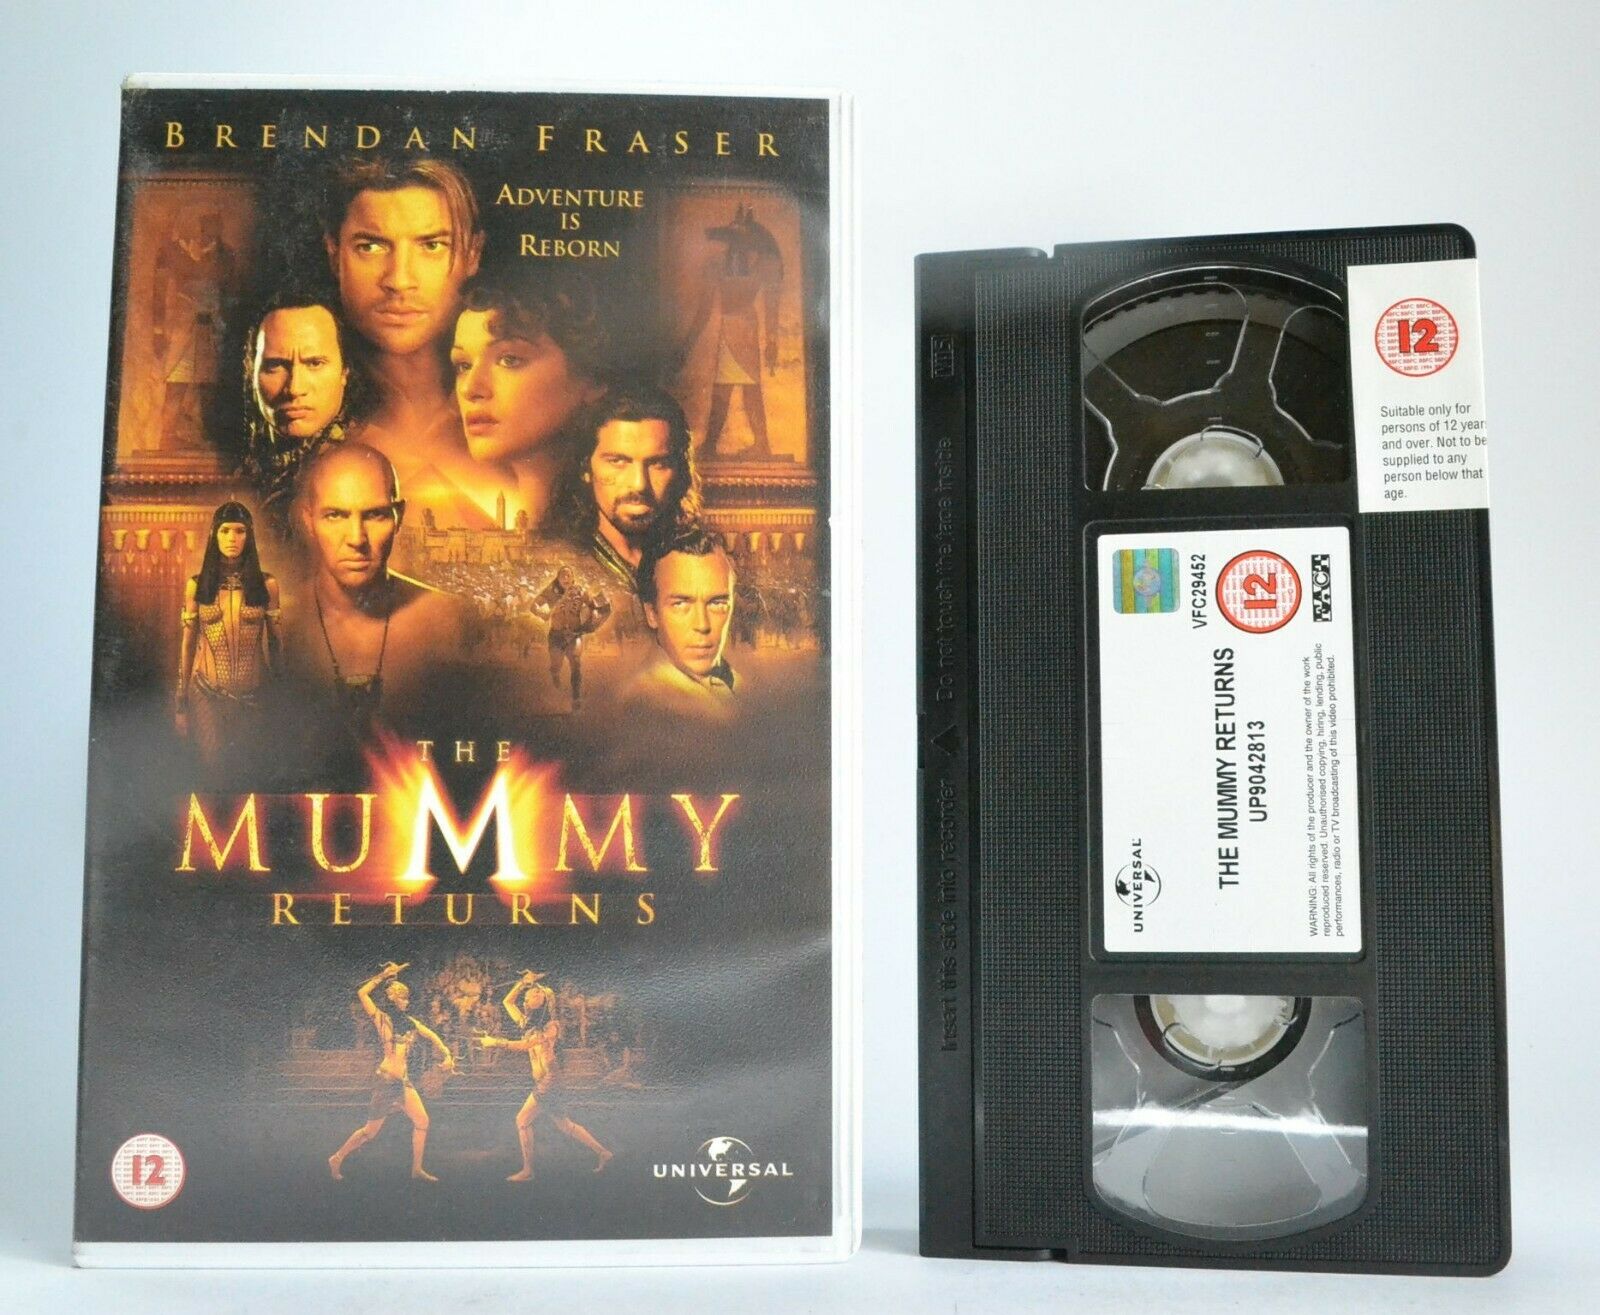 The Mummy Returns (2001): Adventure Is Reborn - Large Box - Brendan Fraser - VHS-